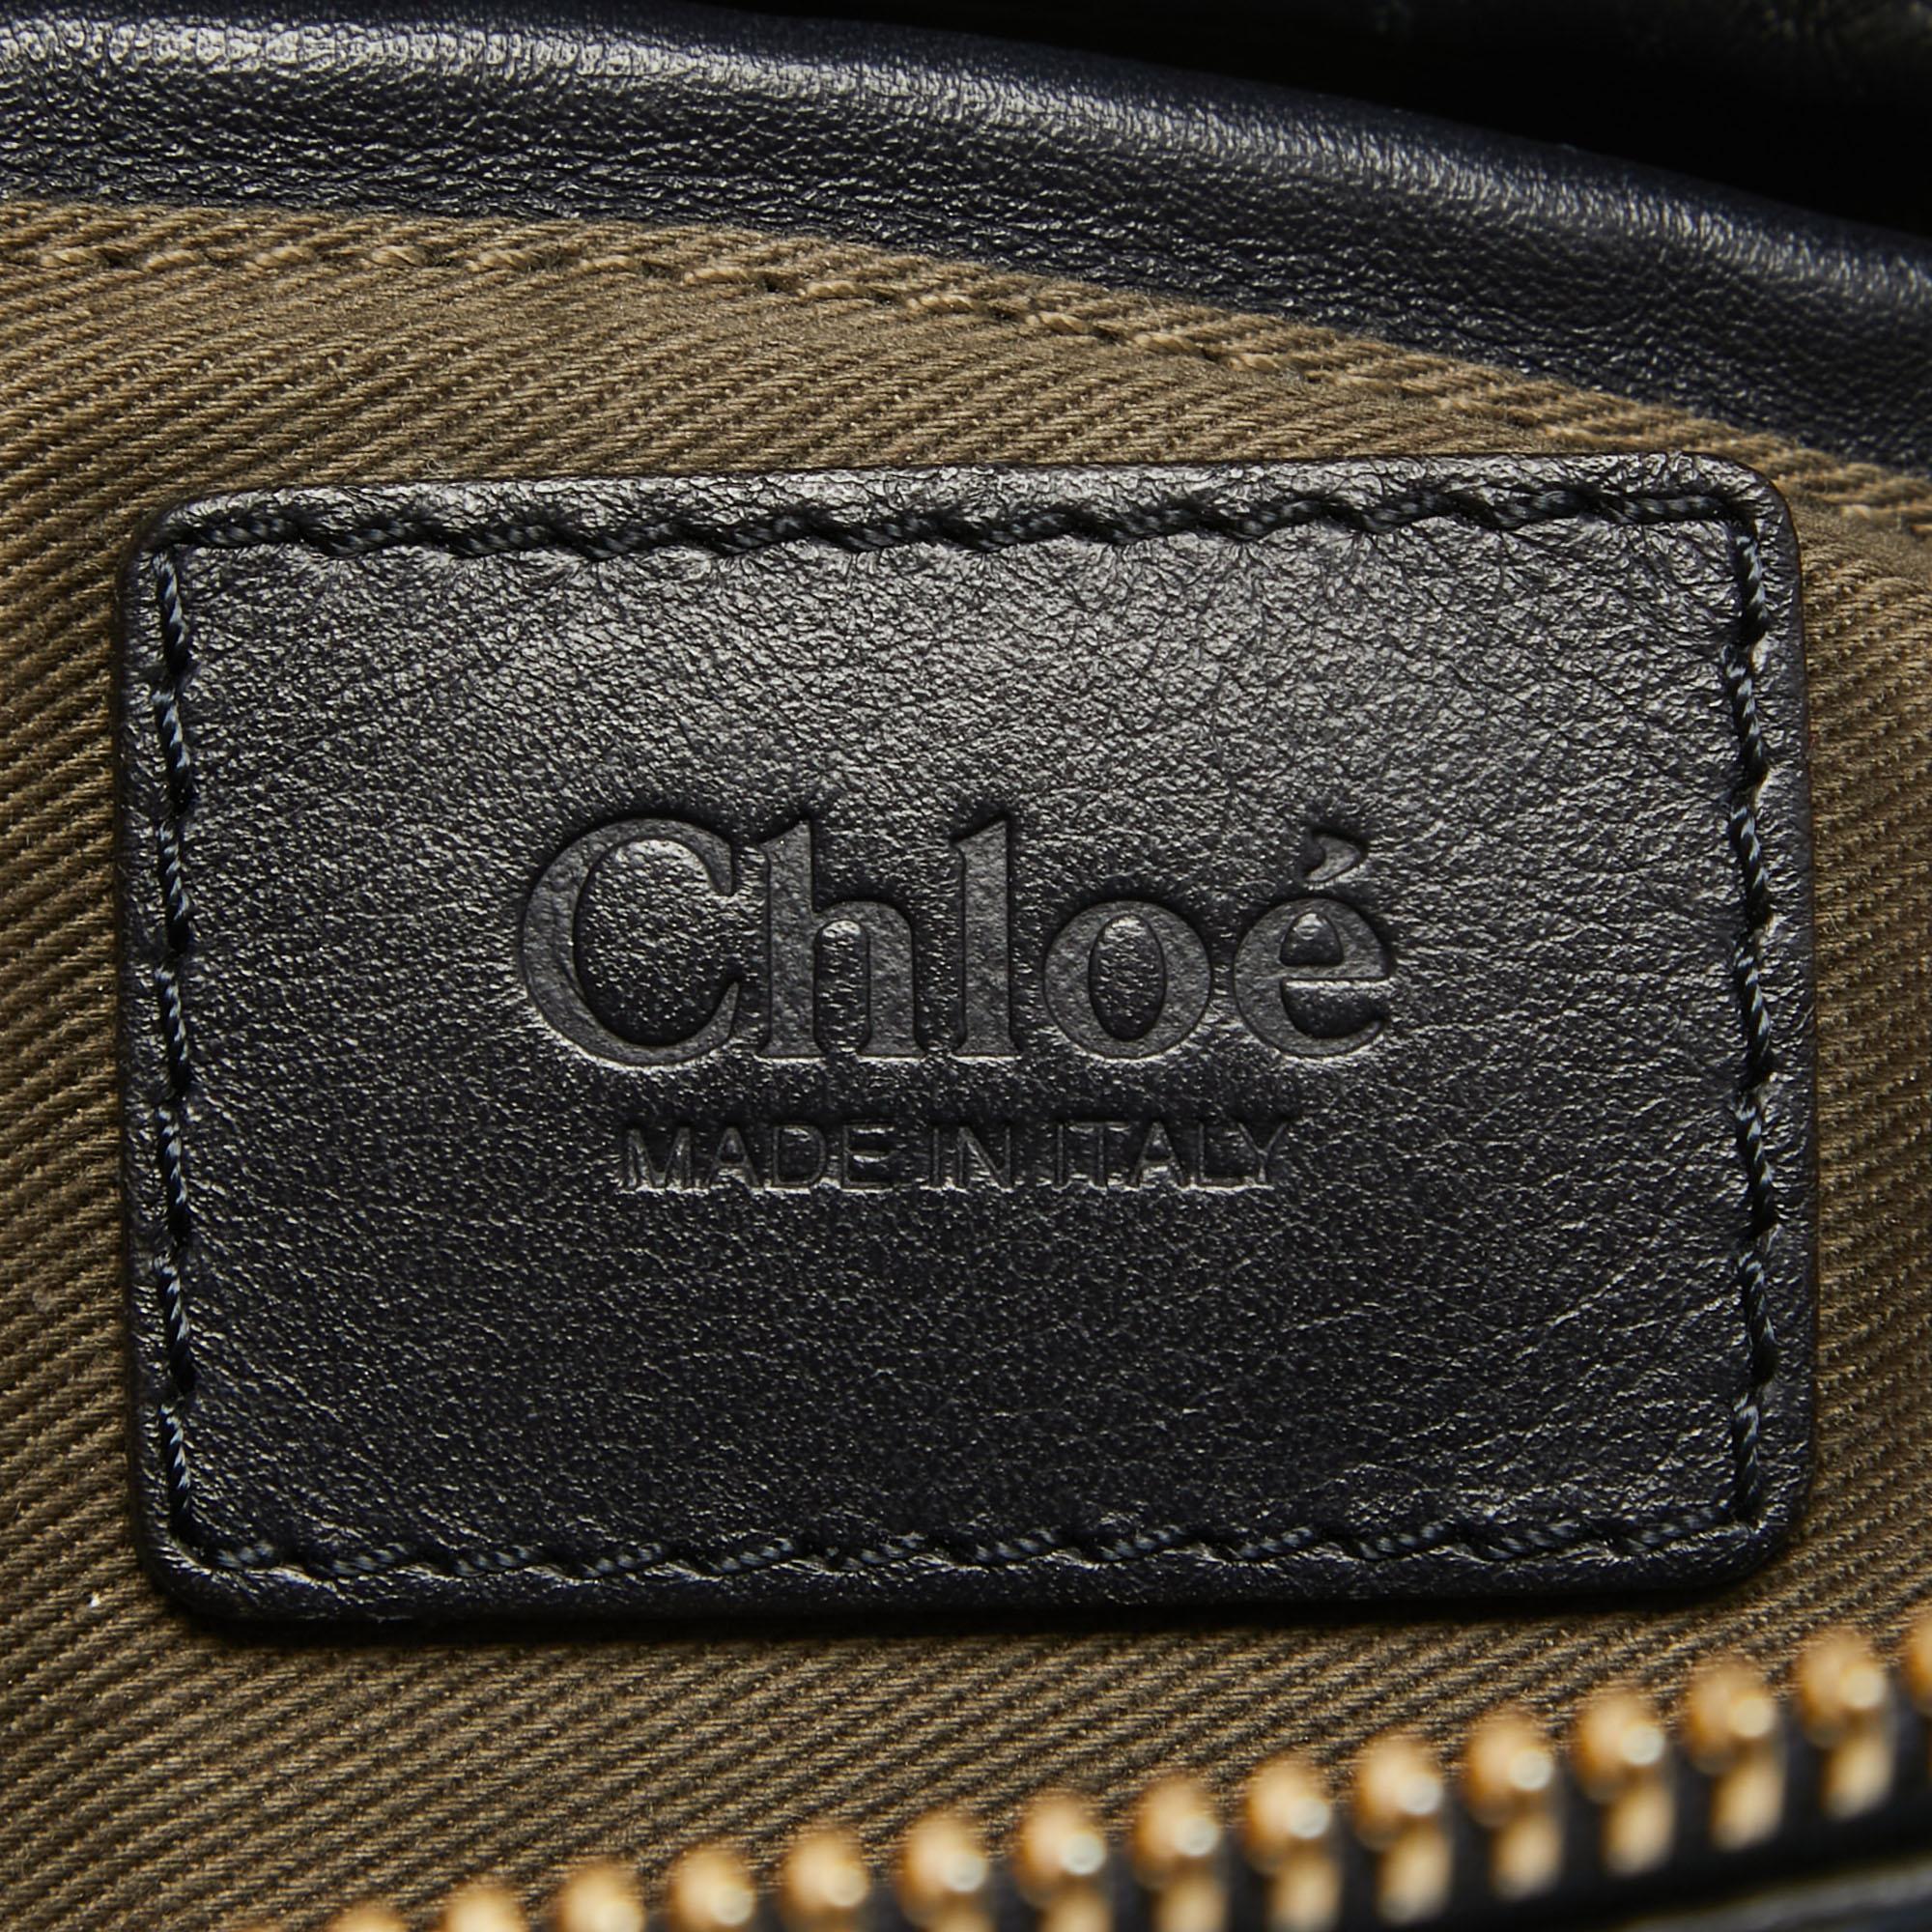 Chloe Navy Blue Croc Embossed Leather Marcie Hobo In Good Condition For Sale In Dubai, Al Qouz 2